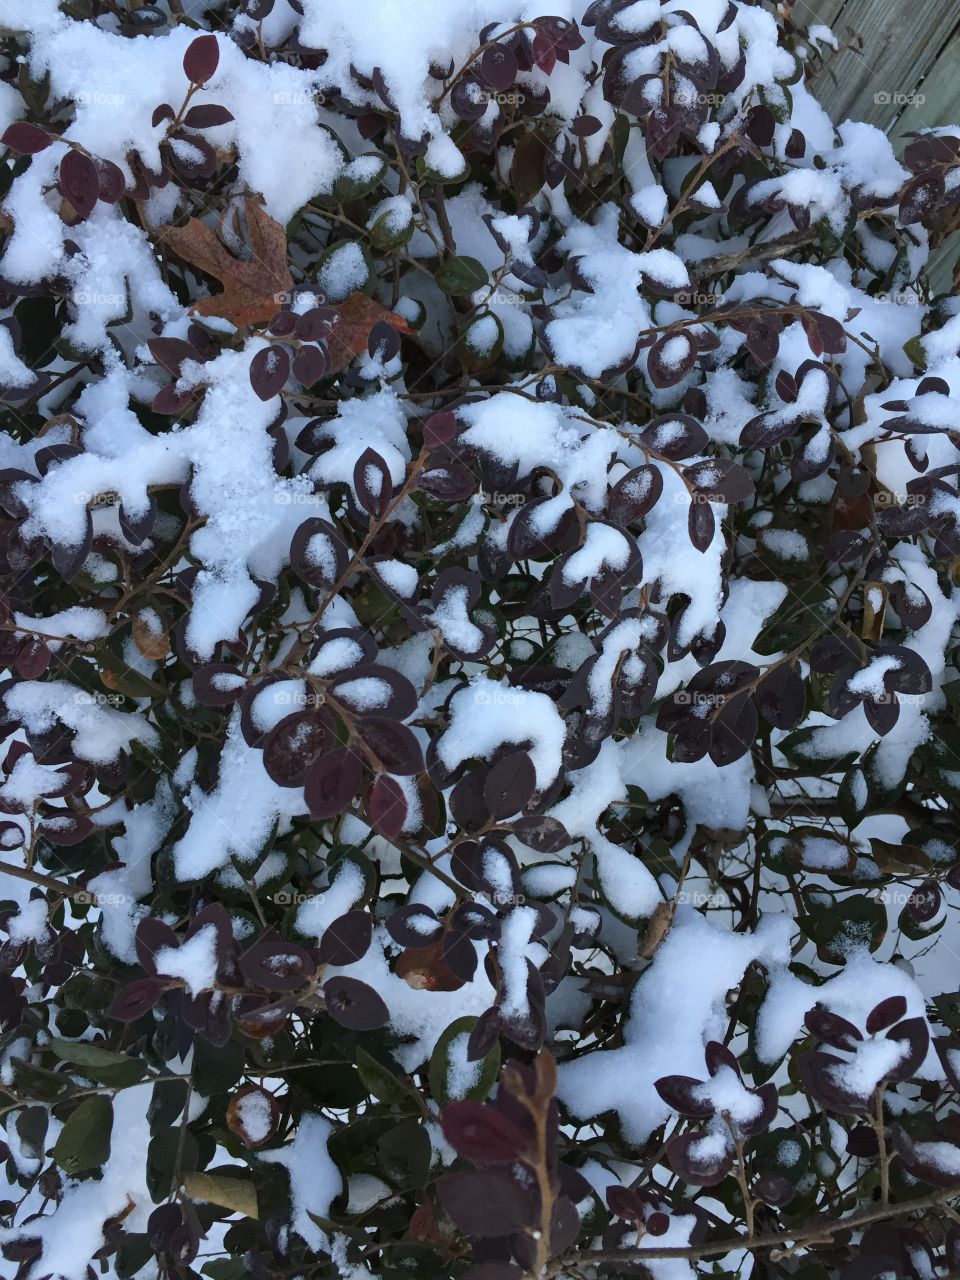 Snow on a bush.